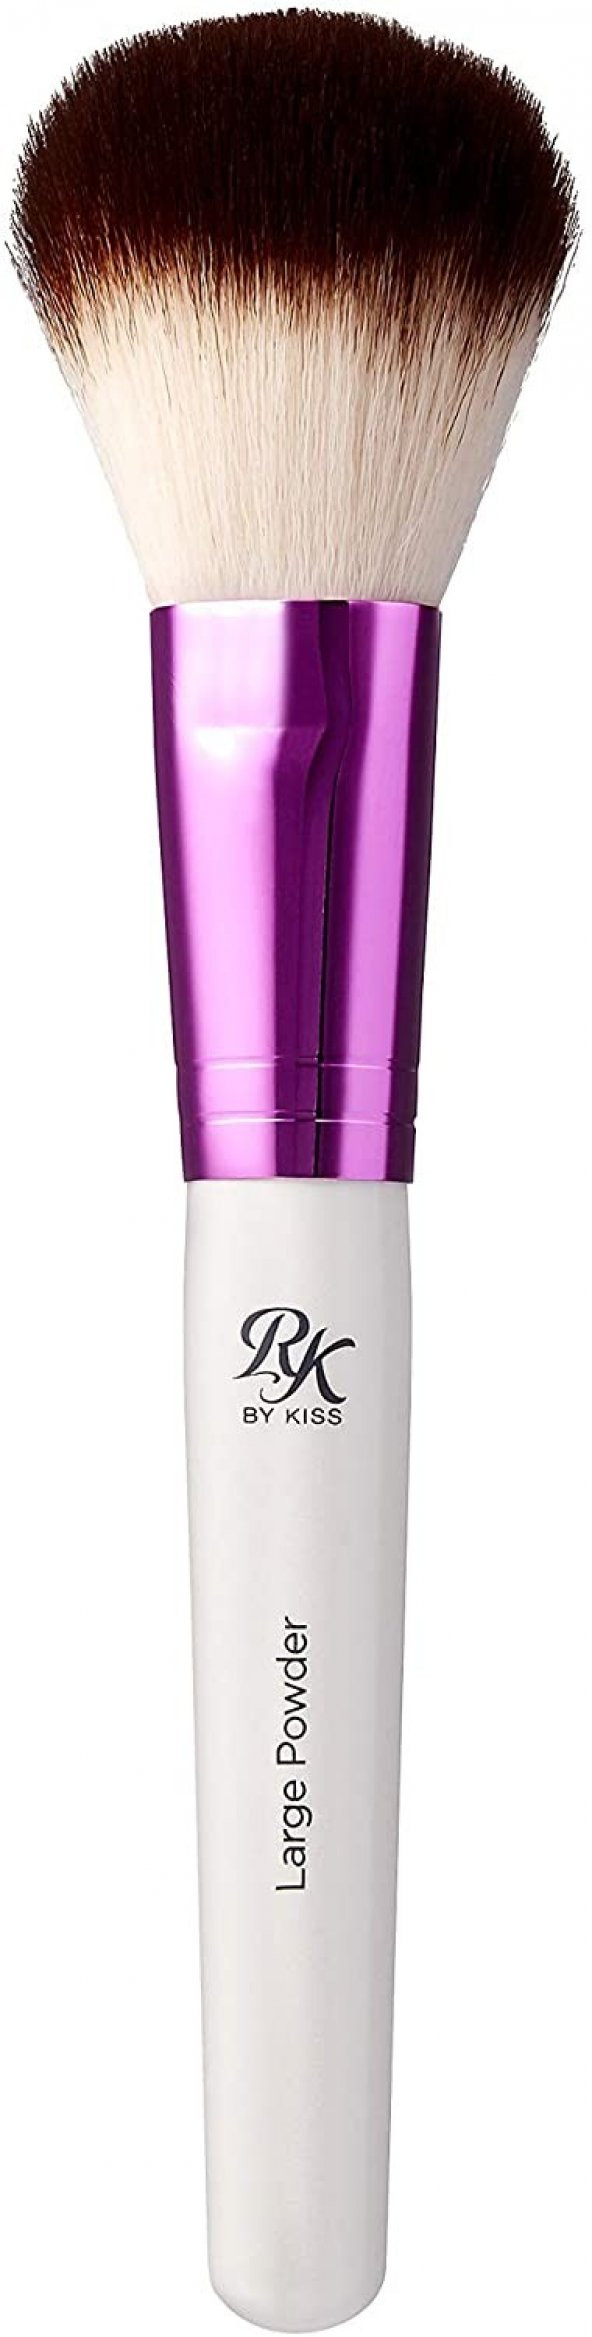 Kiss Rmub02 Rk Makeup Brush Large Powder 1 Paket (1 x 40 g)